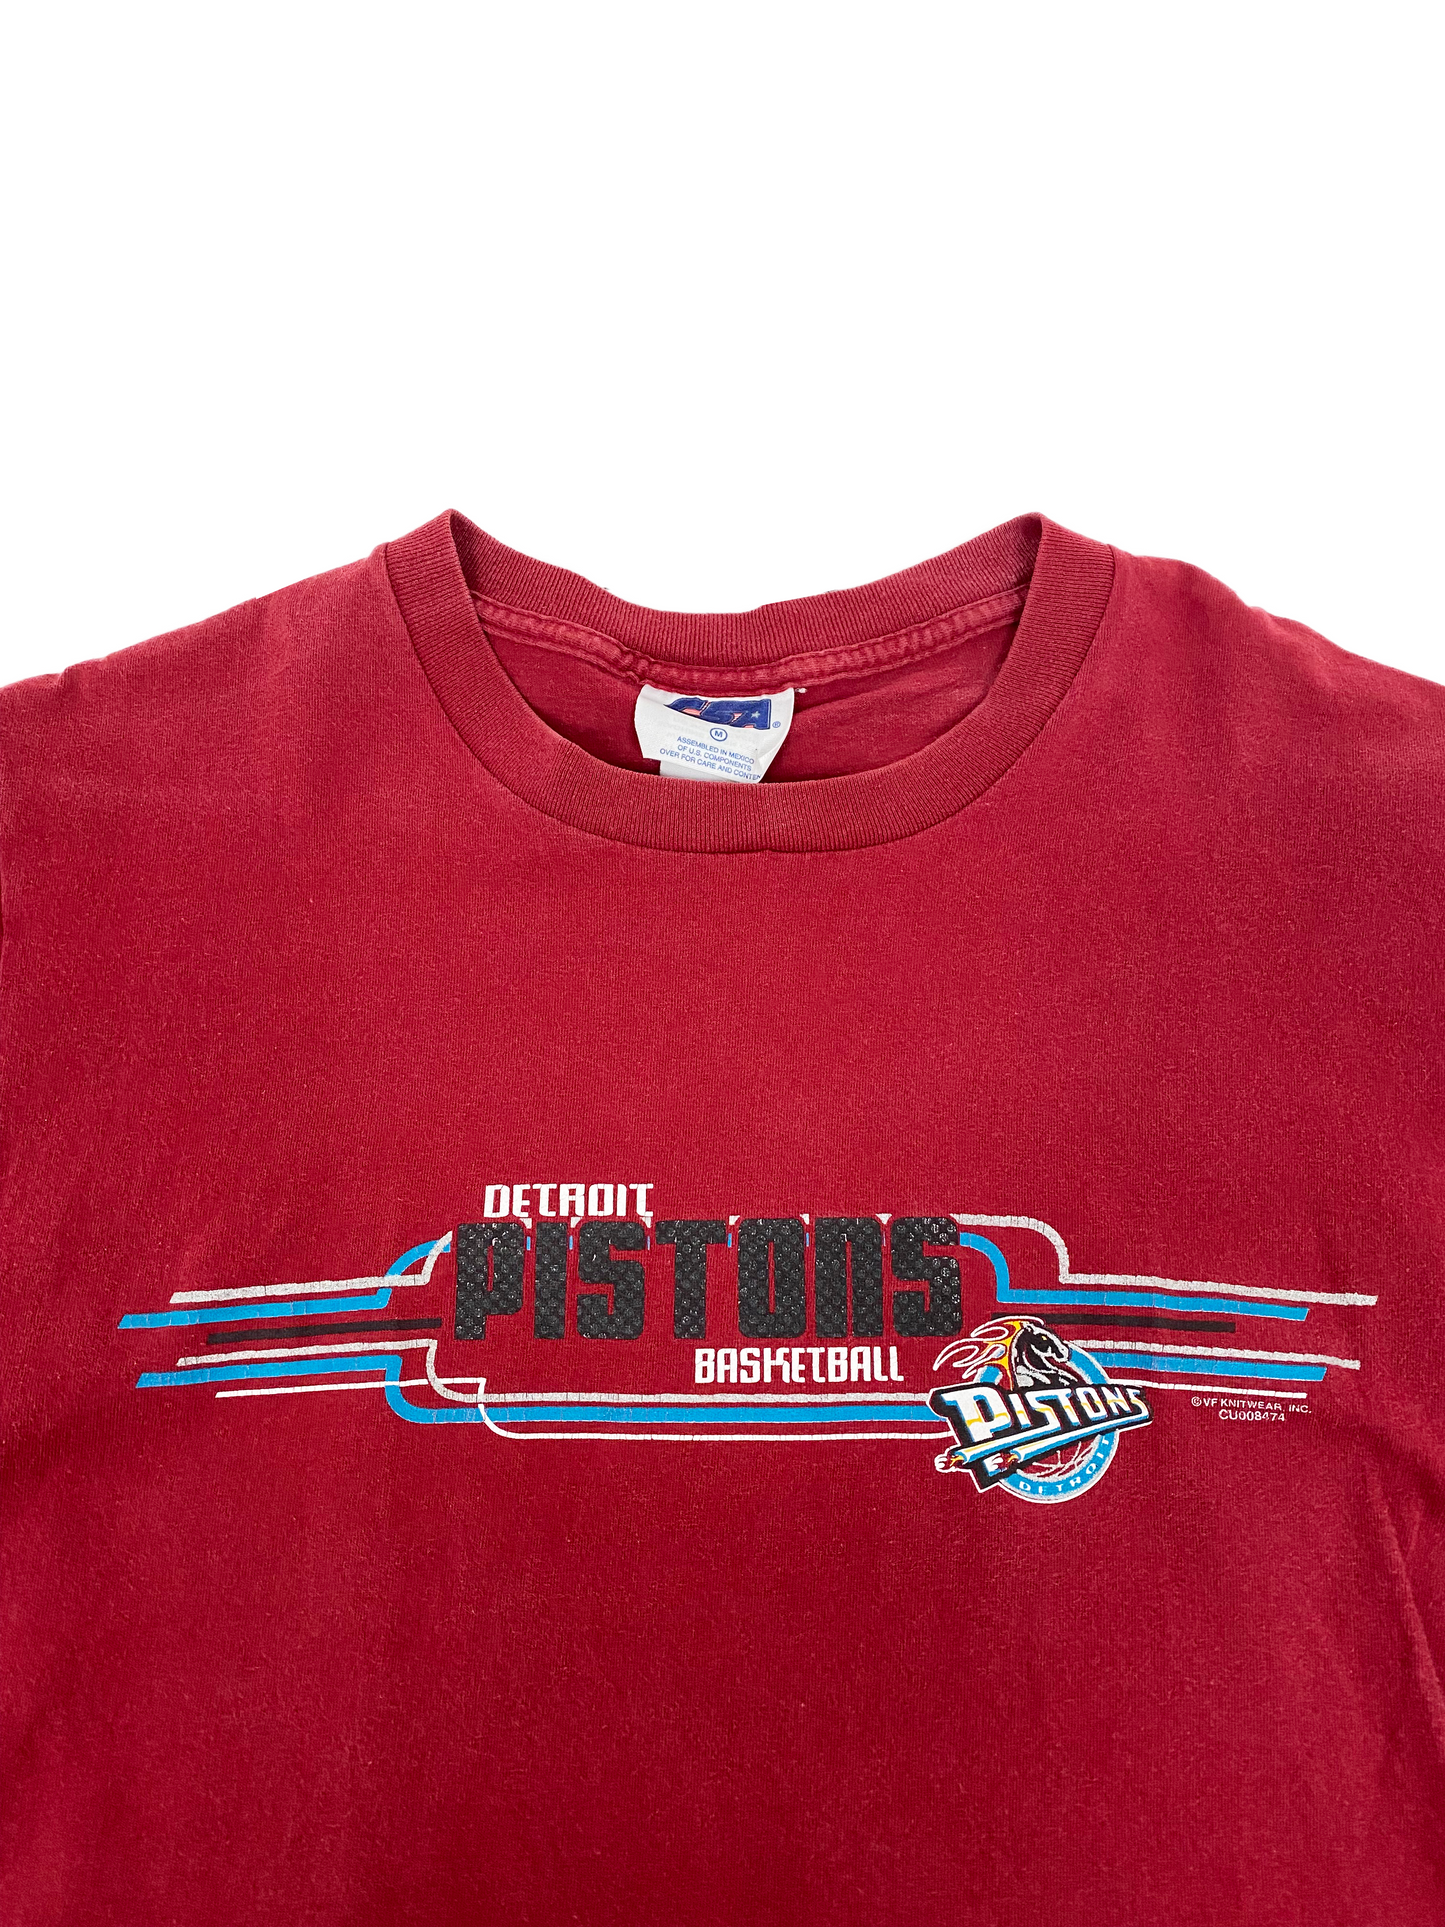 Detroit Pistons Basketball T-Shirt